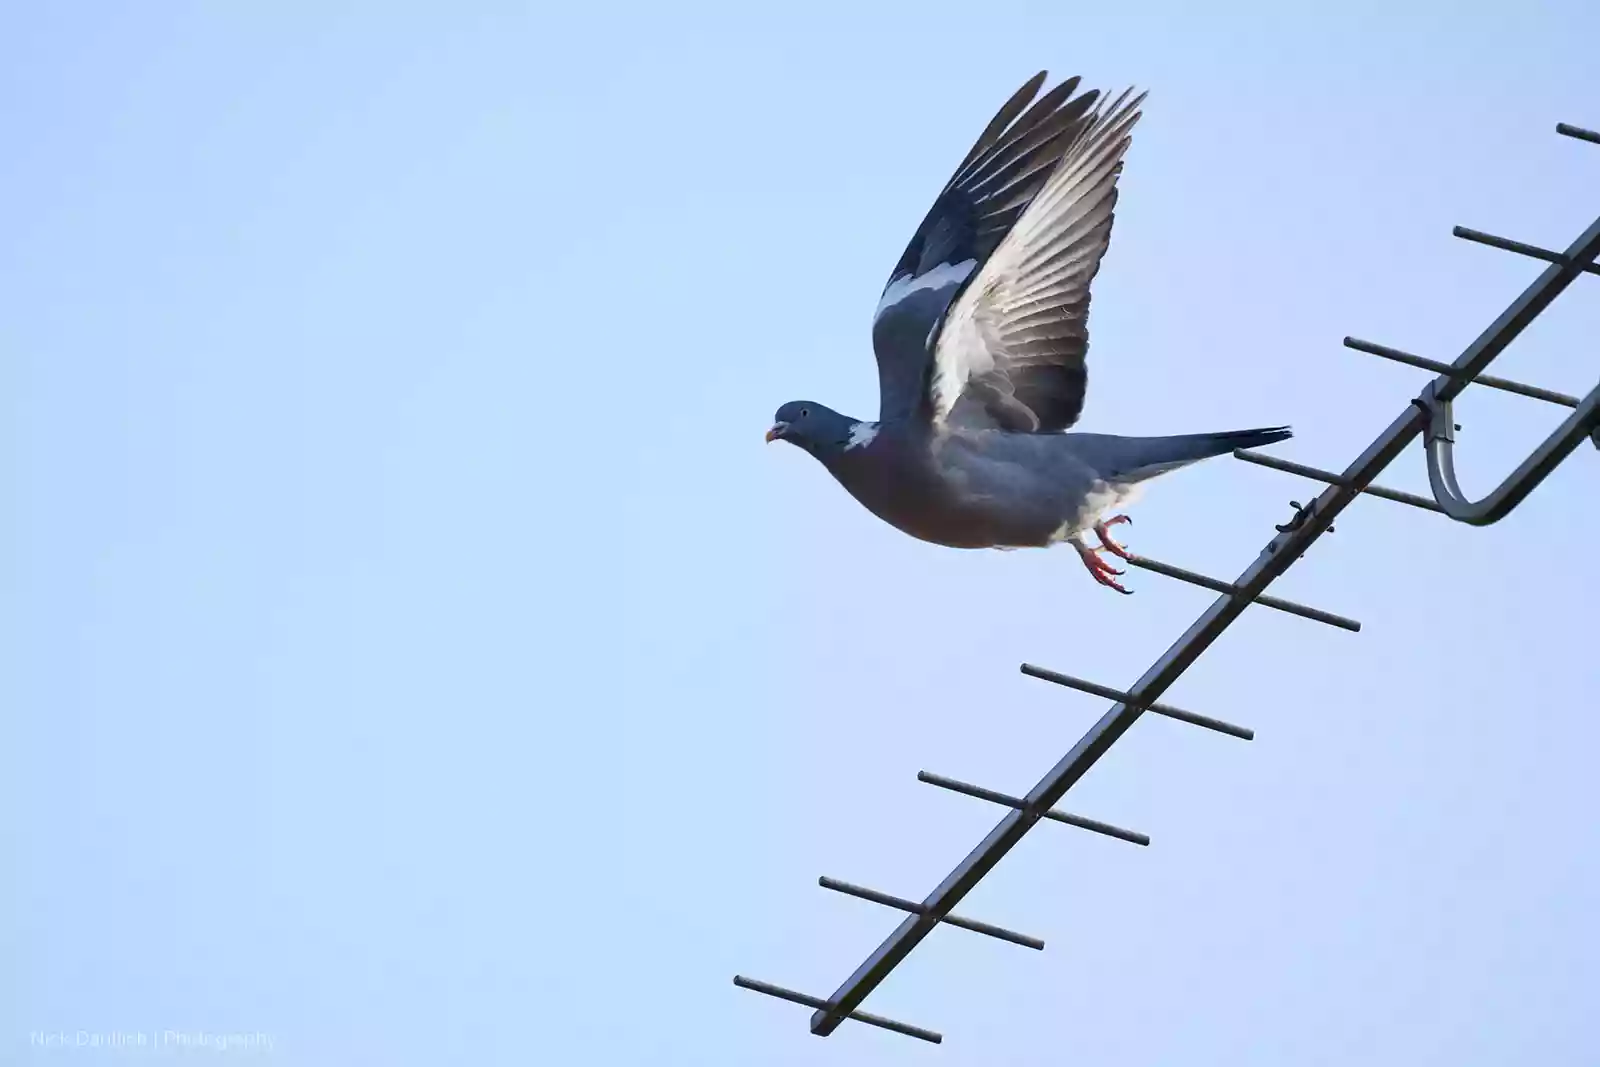 Pigeon launch